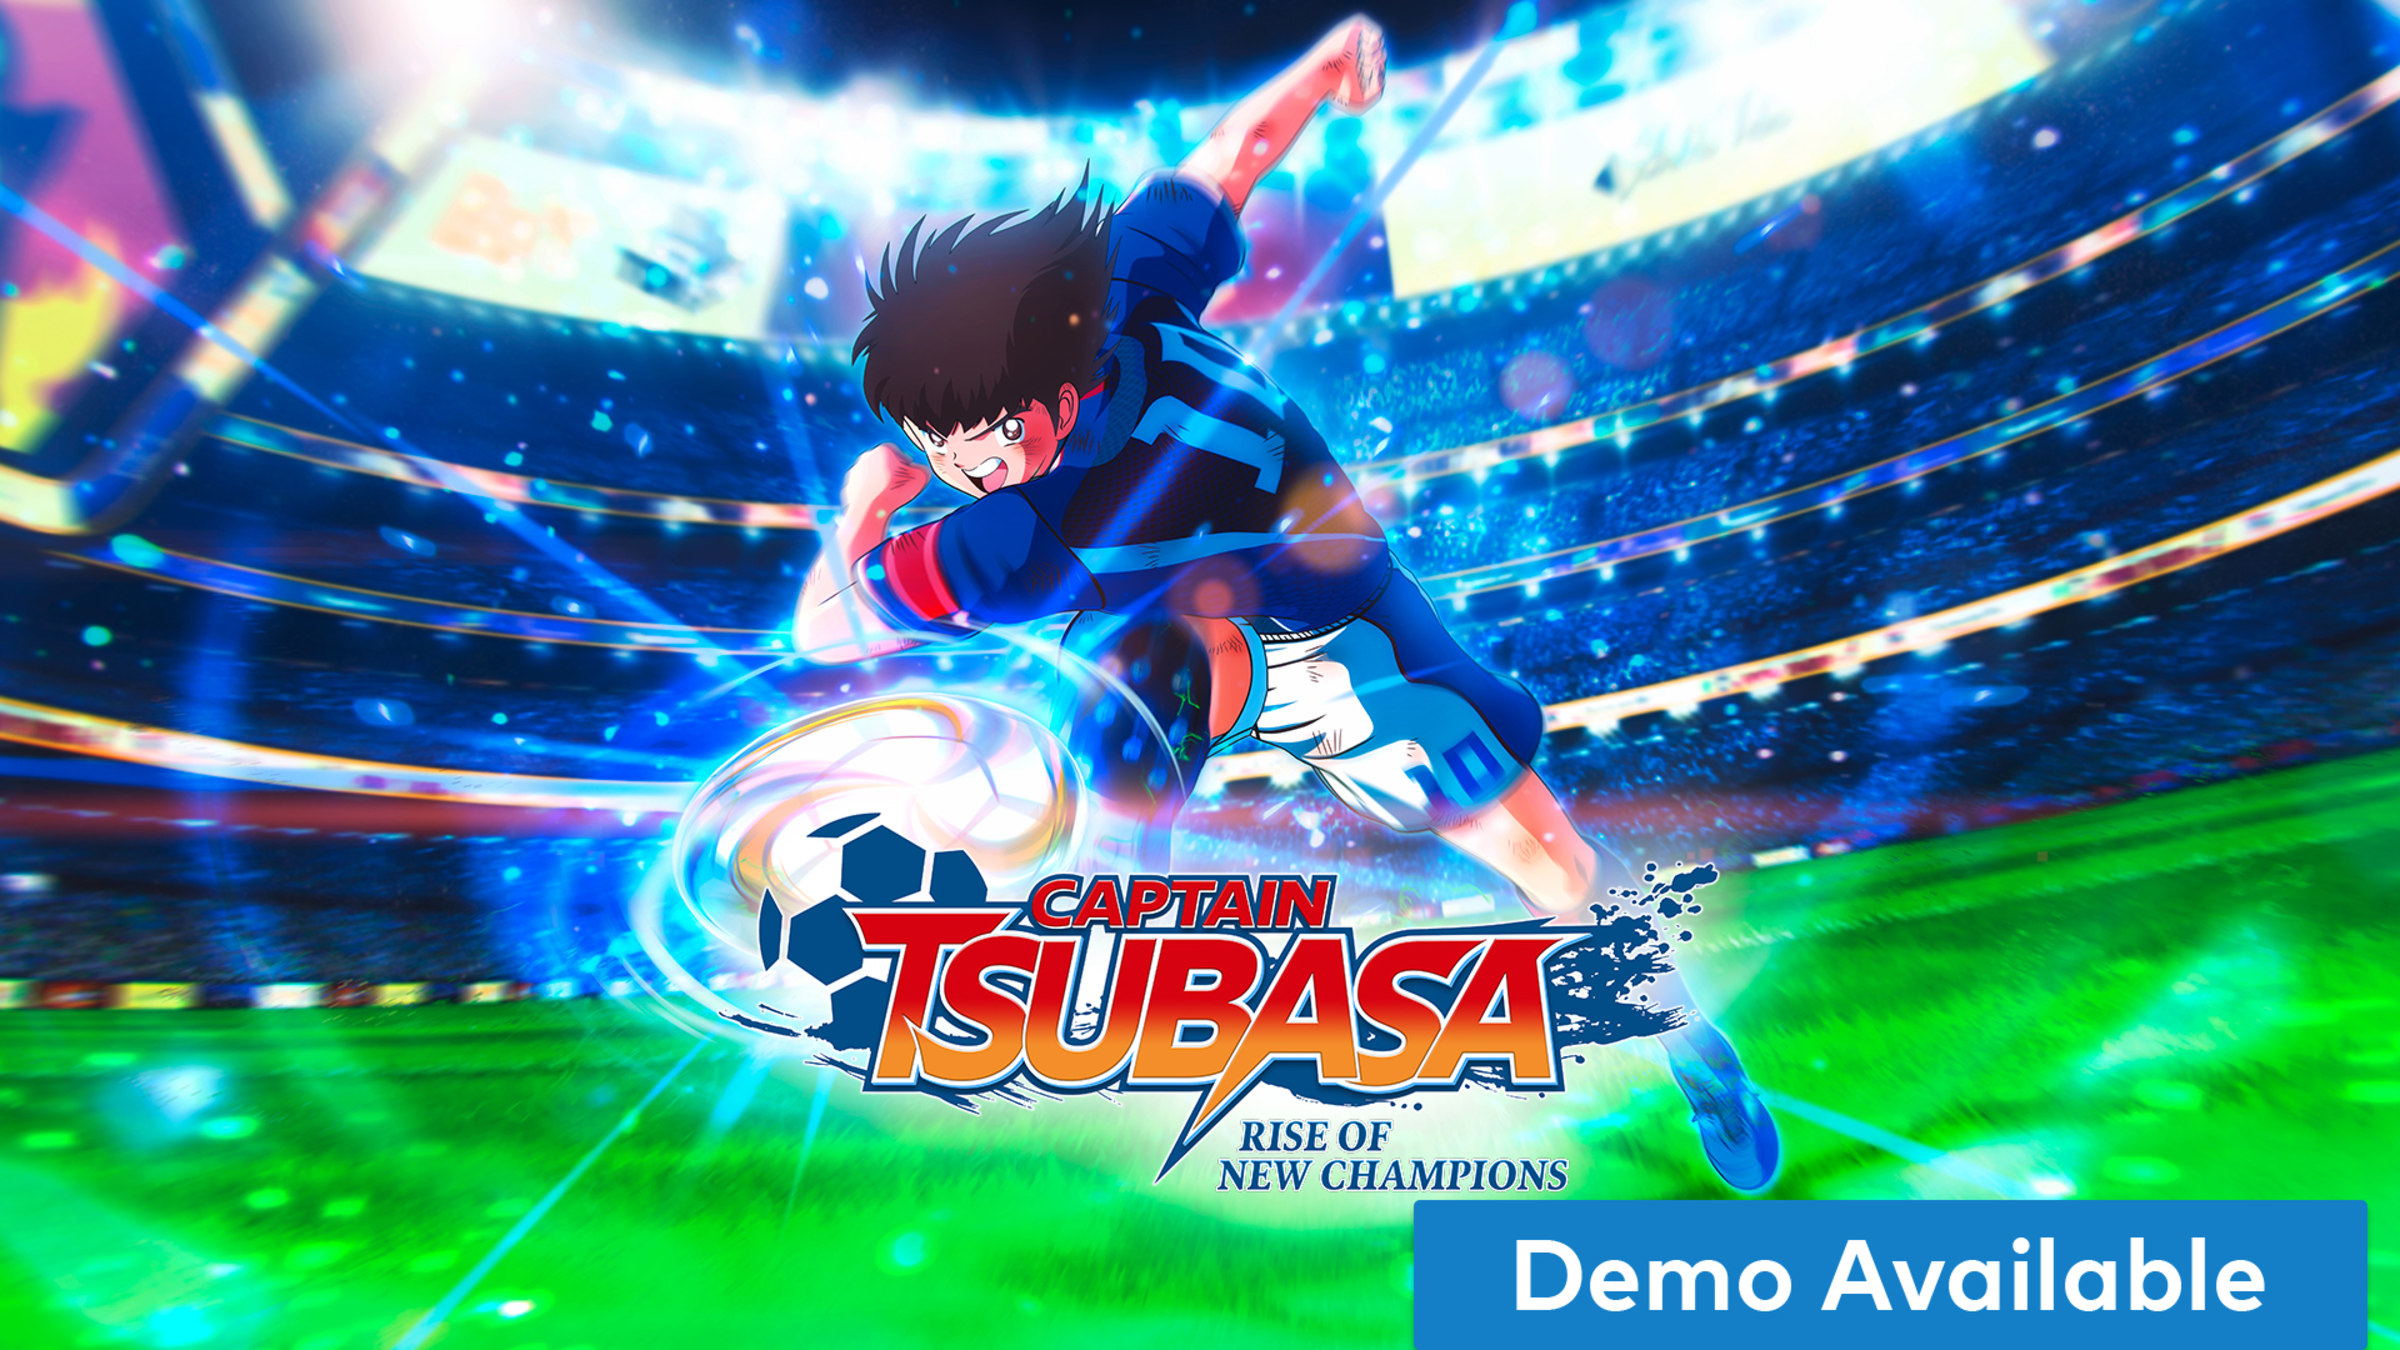 Jogo PS4 Captain Tsubasa: Rise of New Champions